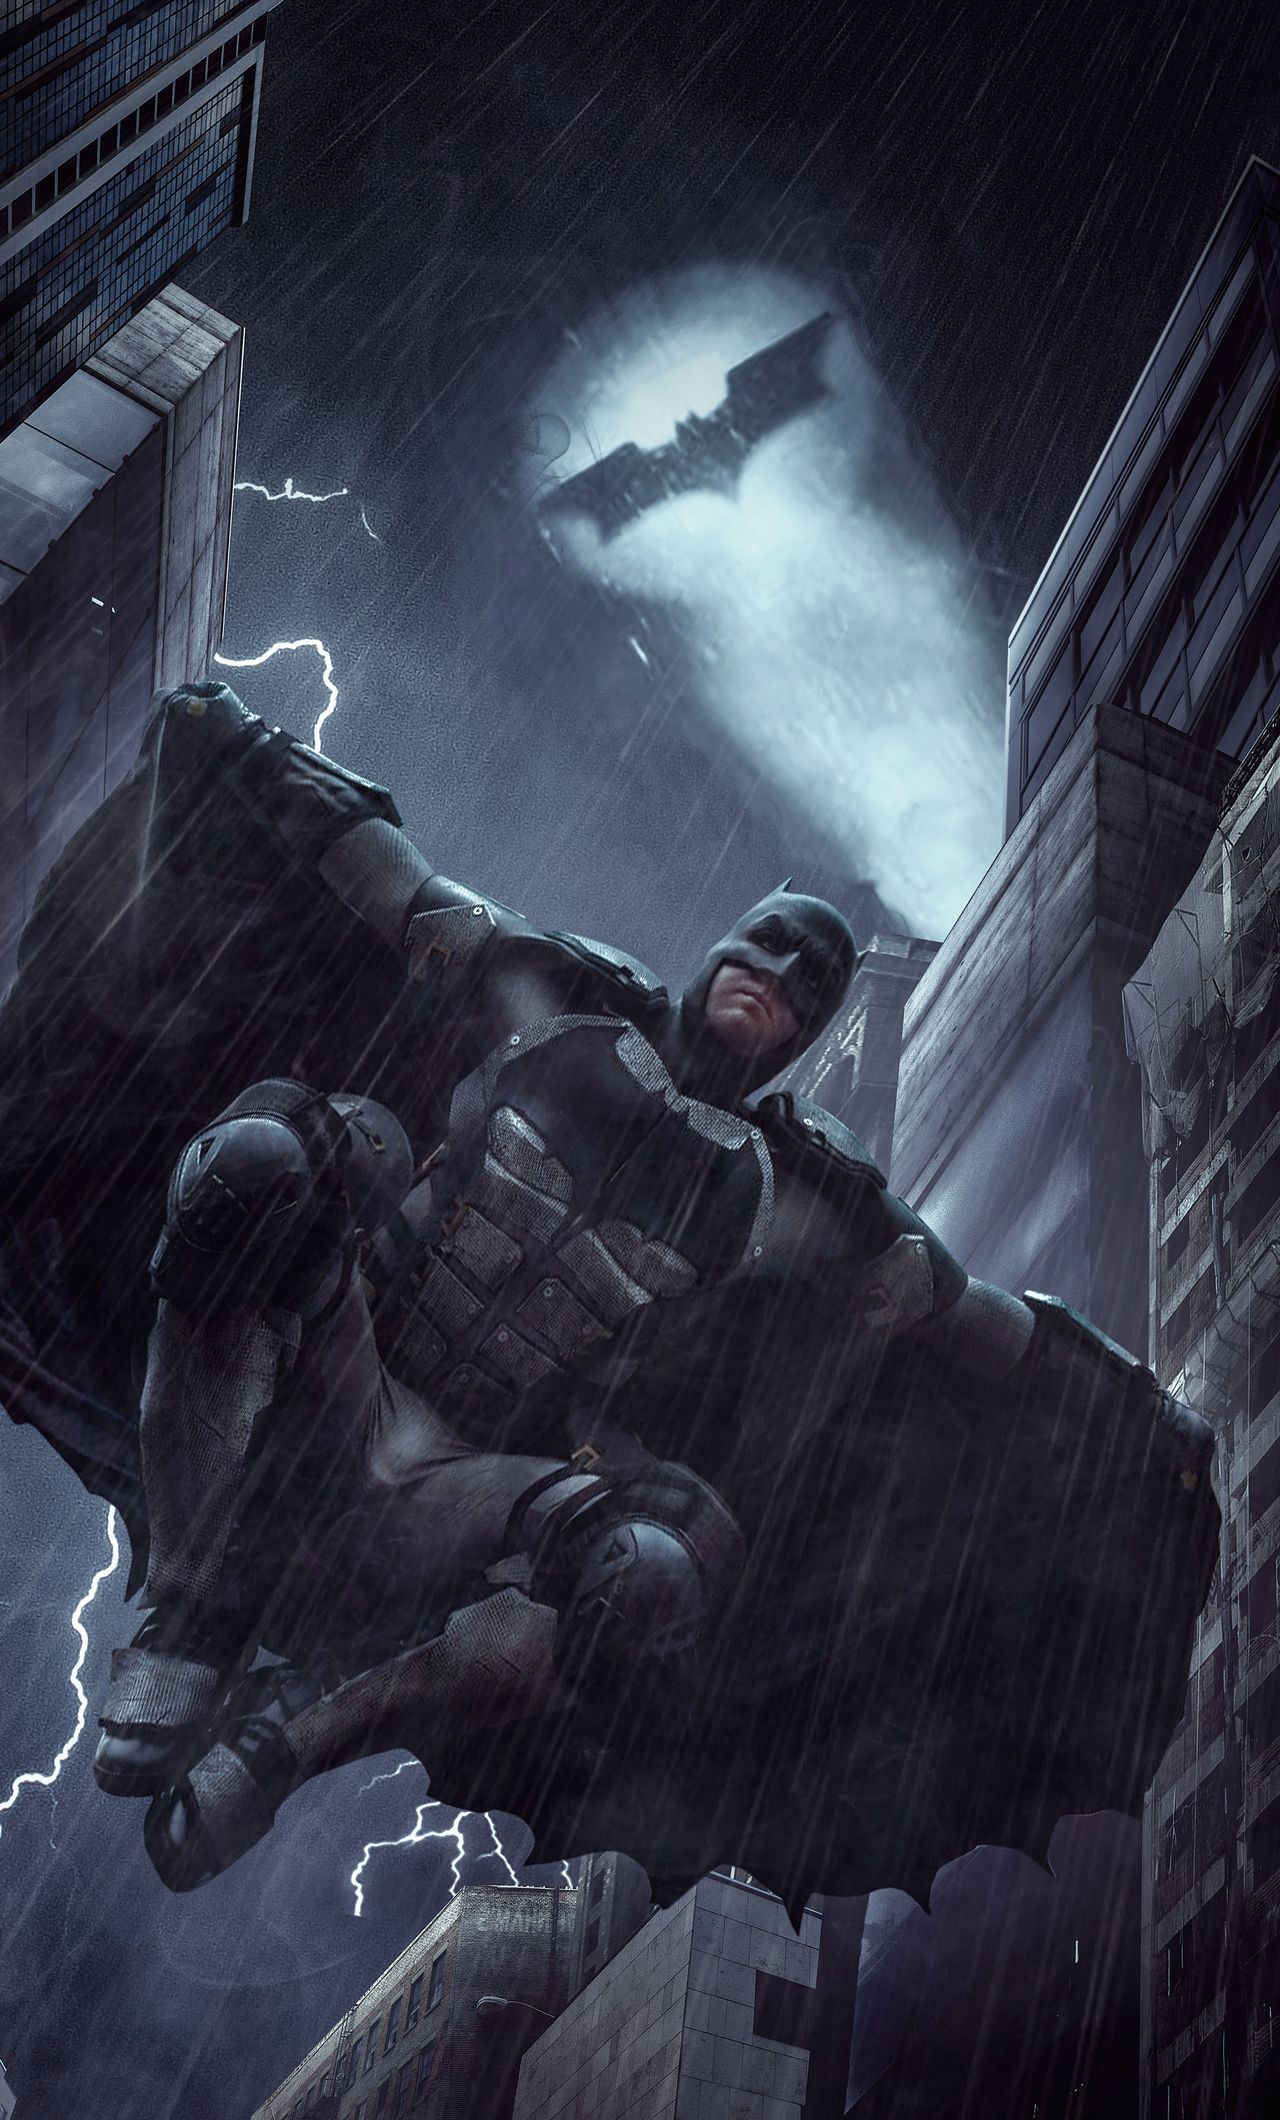 Batman Ben Affleck 4k 2020 iPhone HD 4k Wallpaper, Image, Background, Photo and Picture